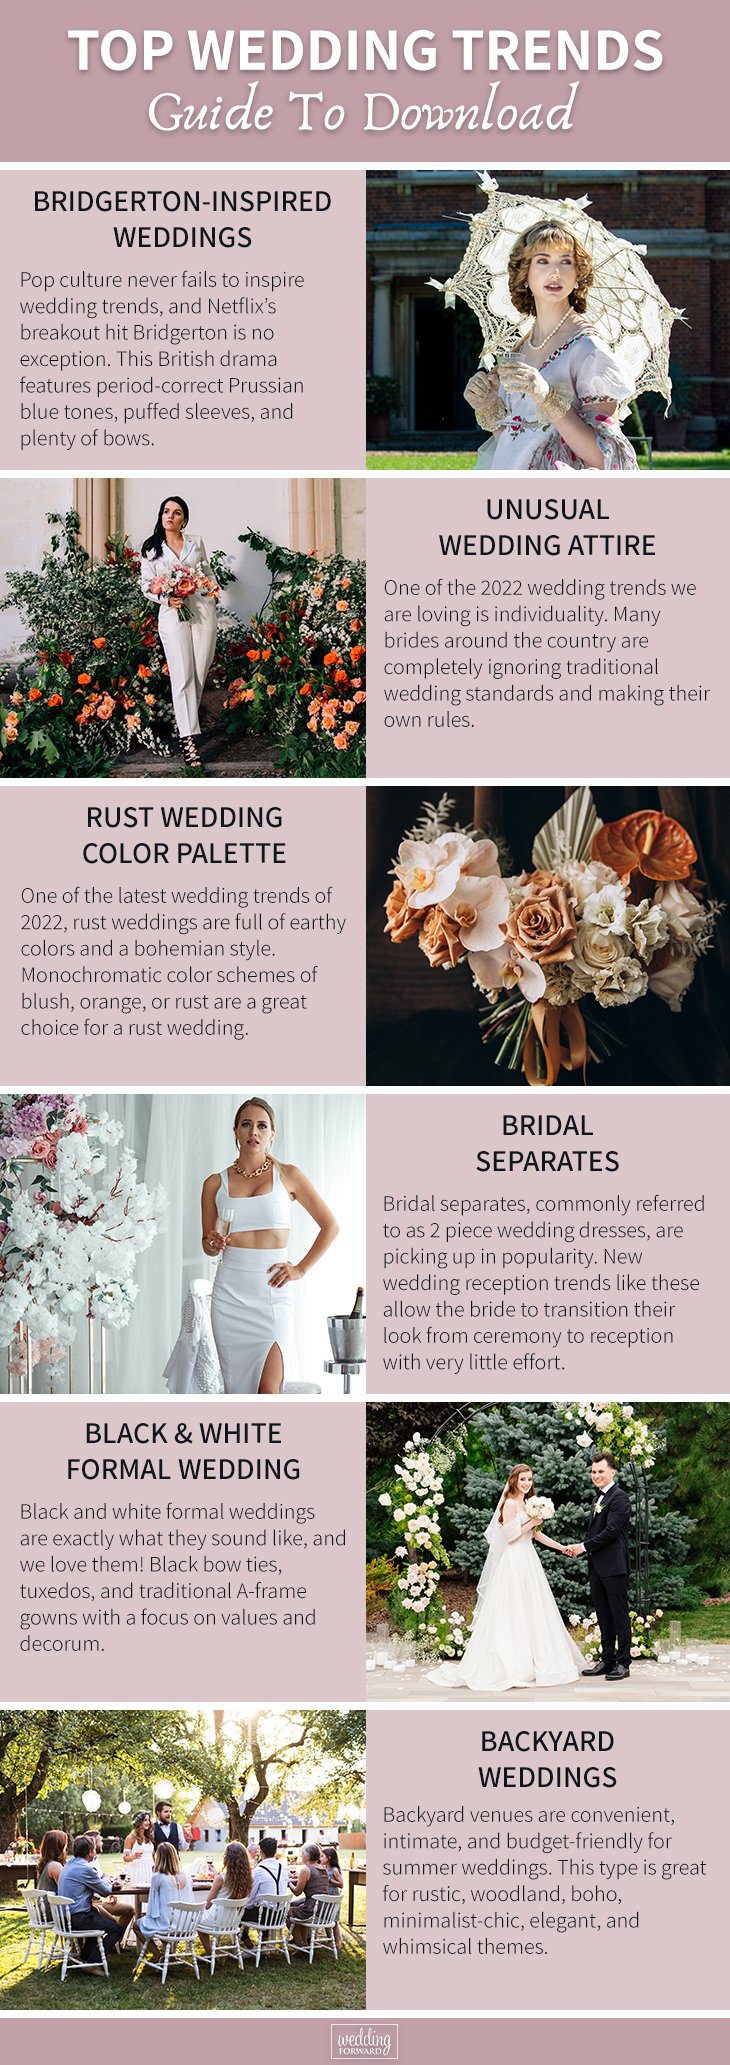 wedding trends trend guide